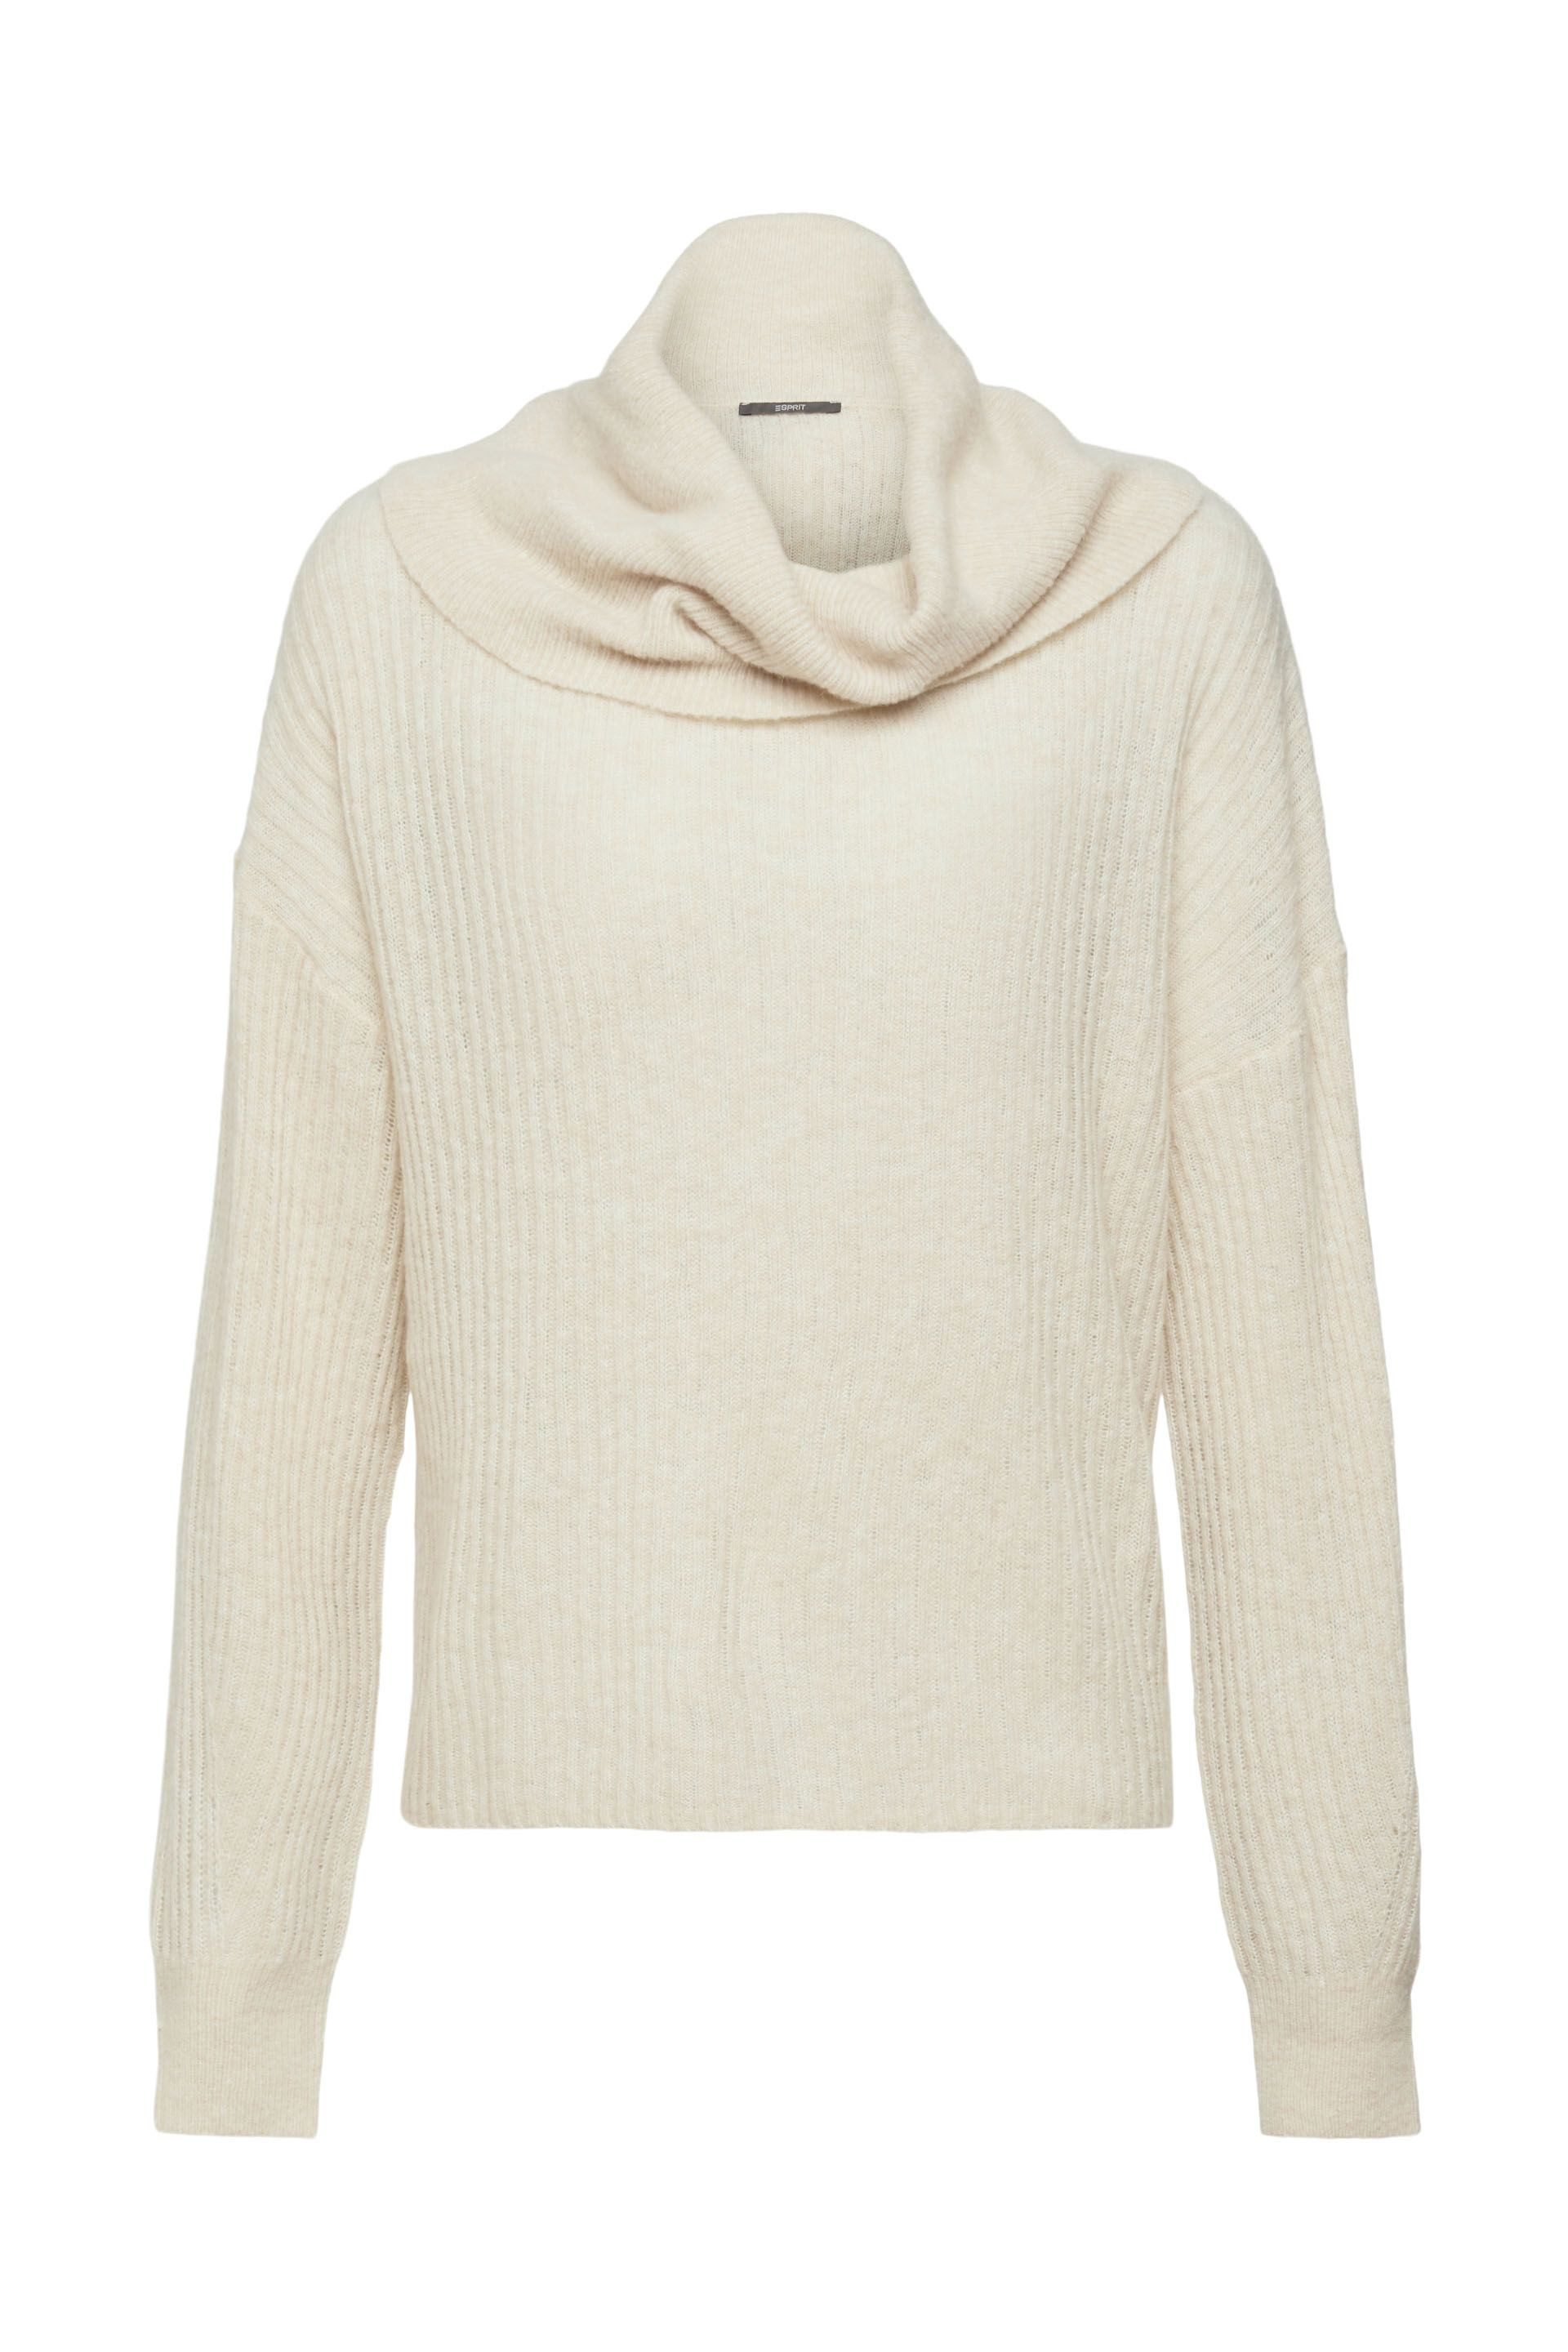 Turtleneck pullover in wool blend, Cream, large image number 0